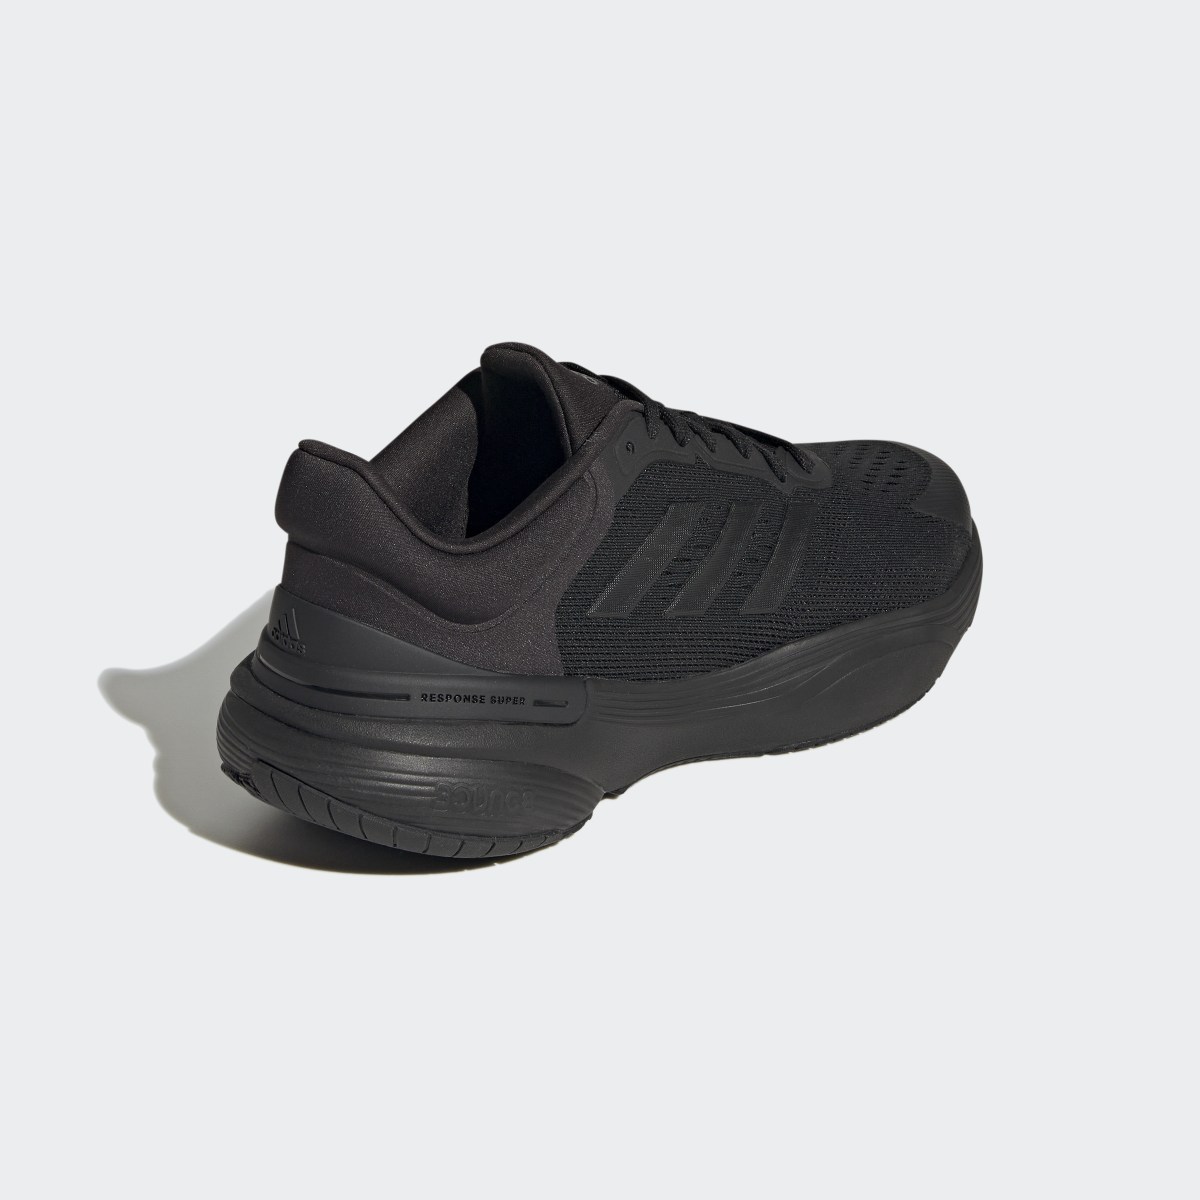 Adidas Response Super 3.0 Shoes. 6